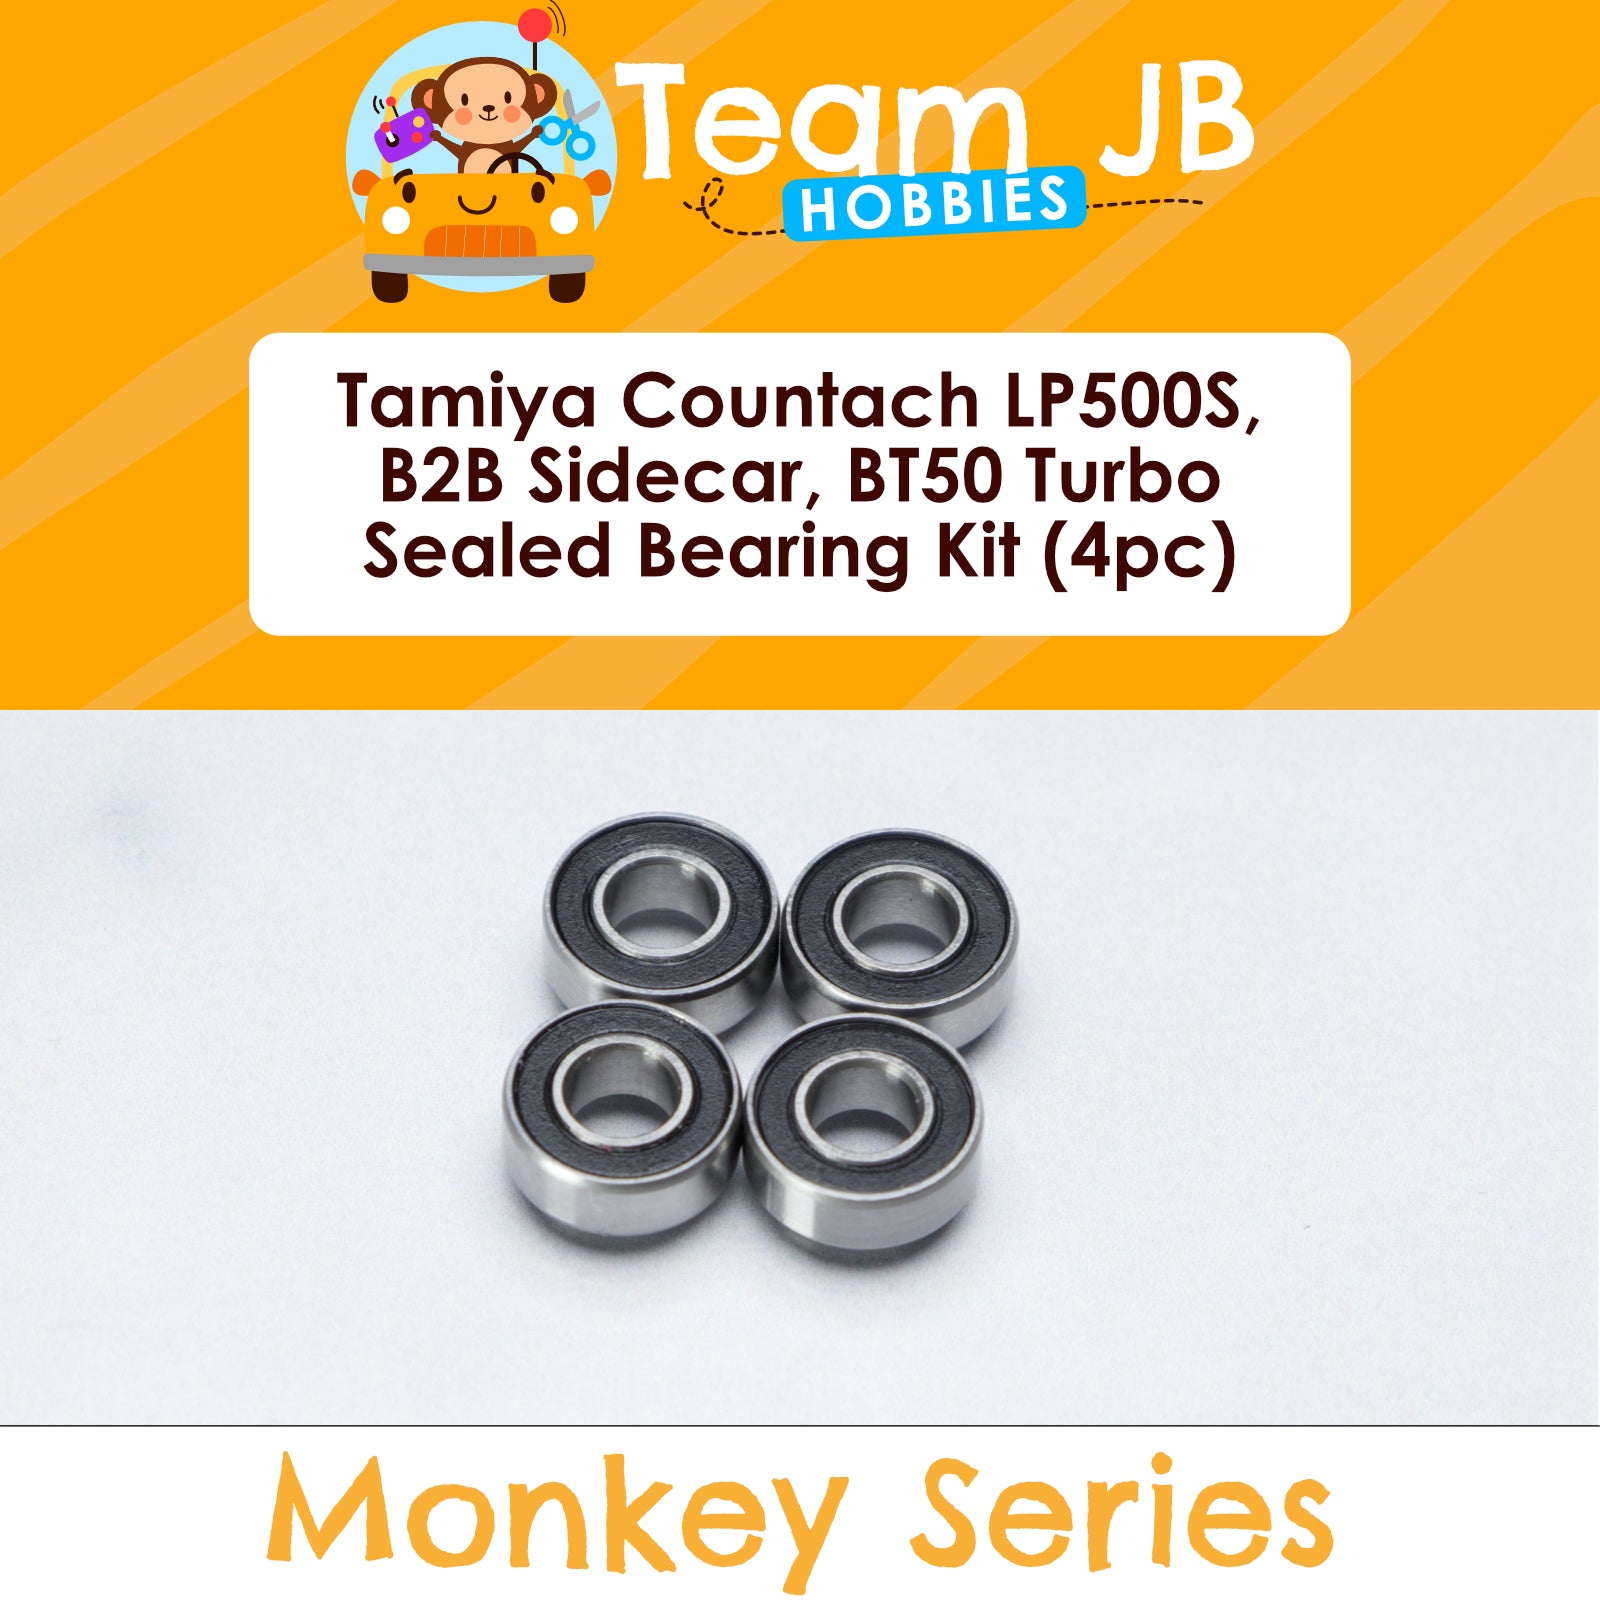 Tamiya Countach LP500S, B2B Sidecar, BT50 Turbo - Sealed Bearing Kit